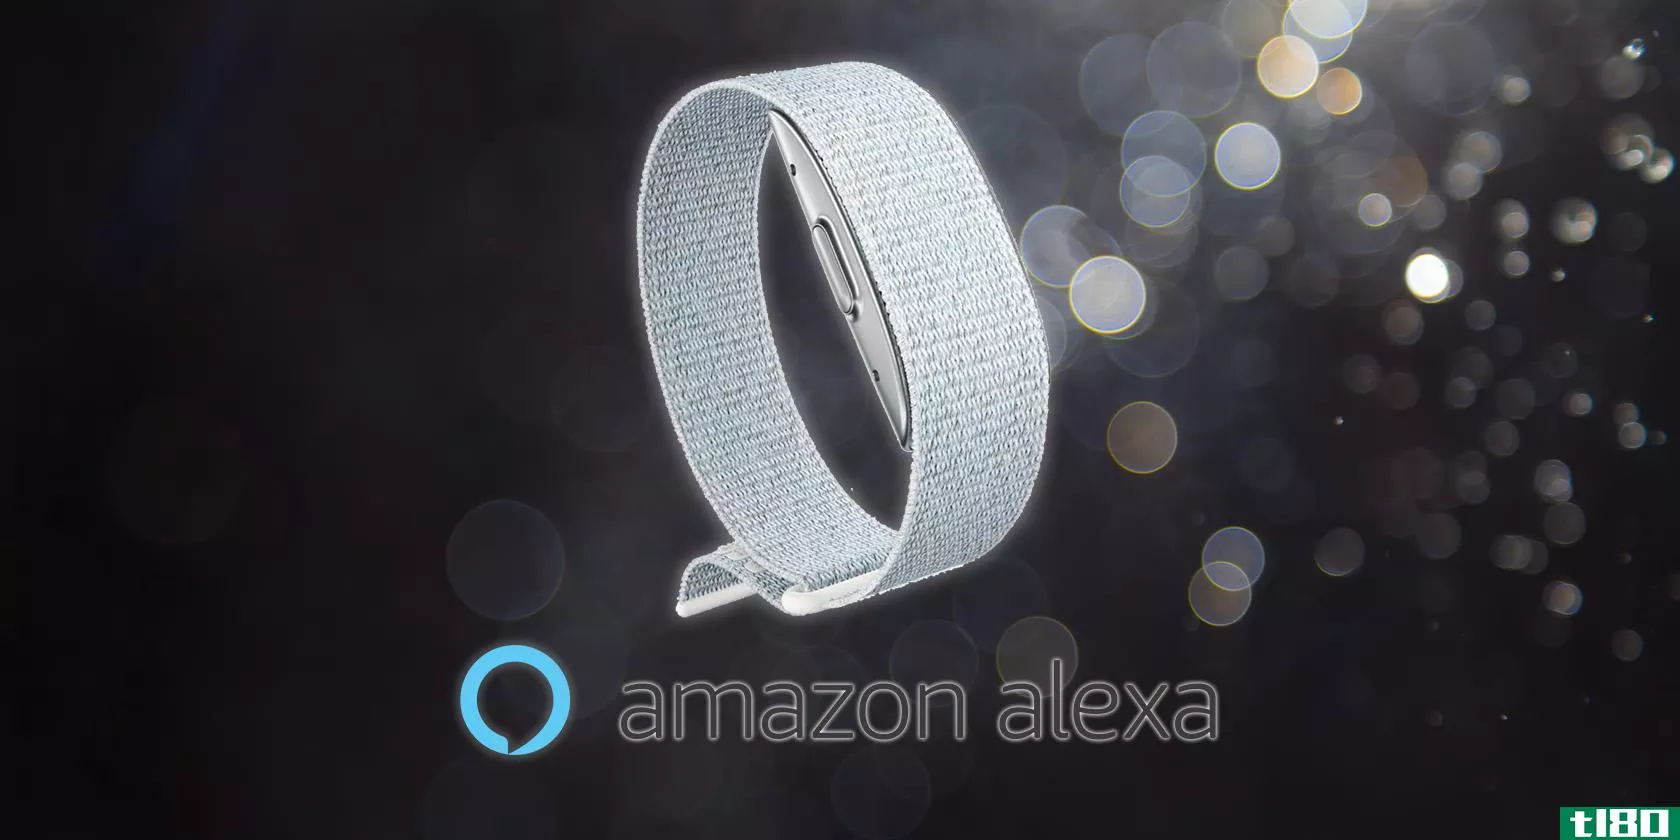 Amazon Alexa on the Halo